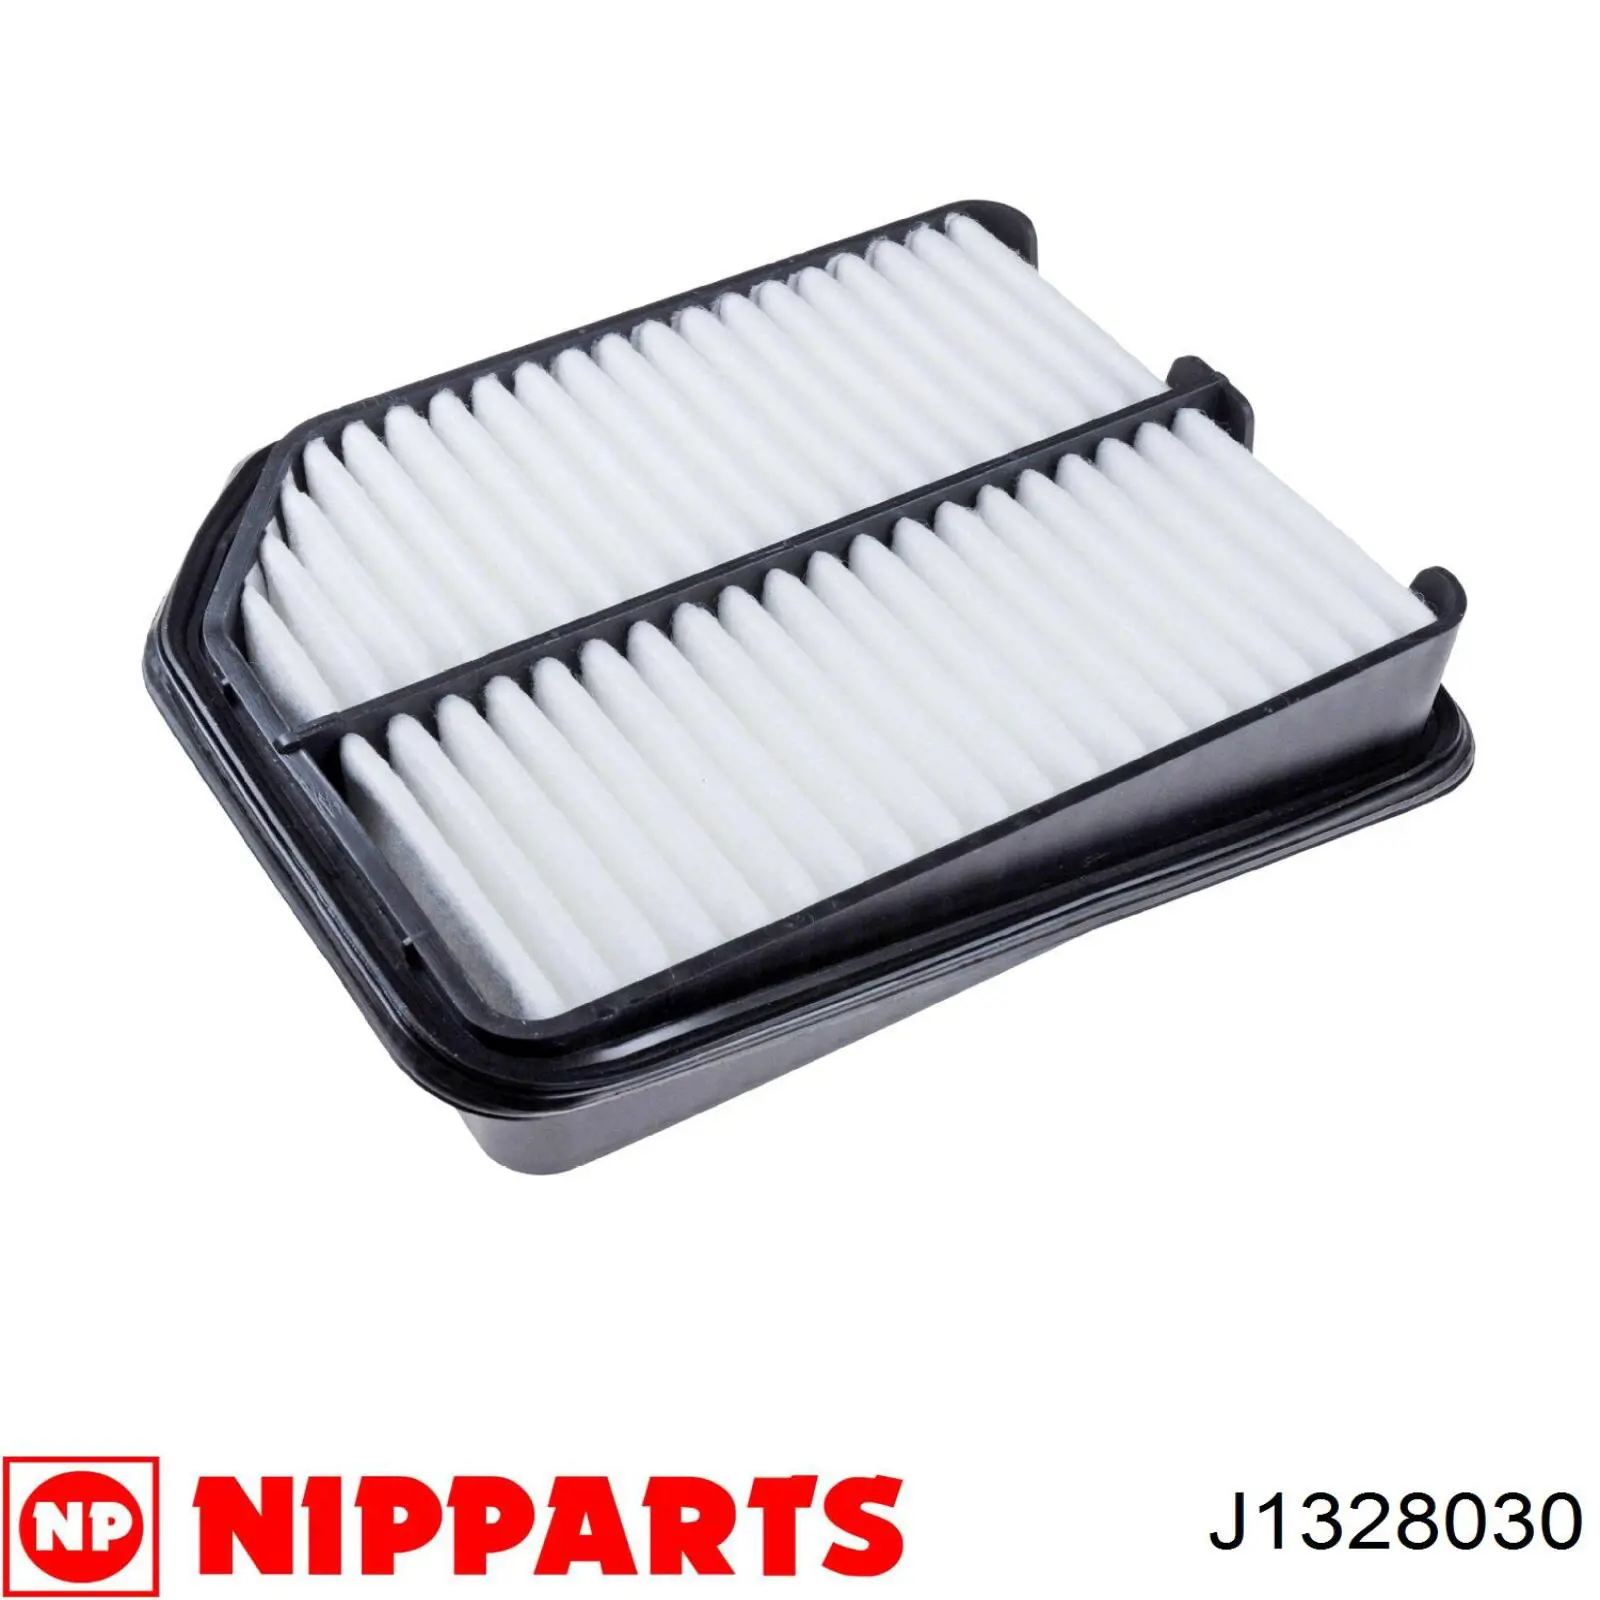 J1328030 Nipparts filtro de aire